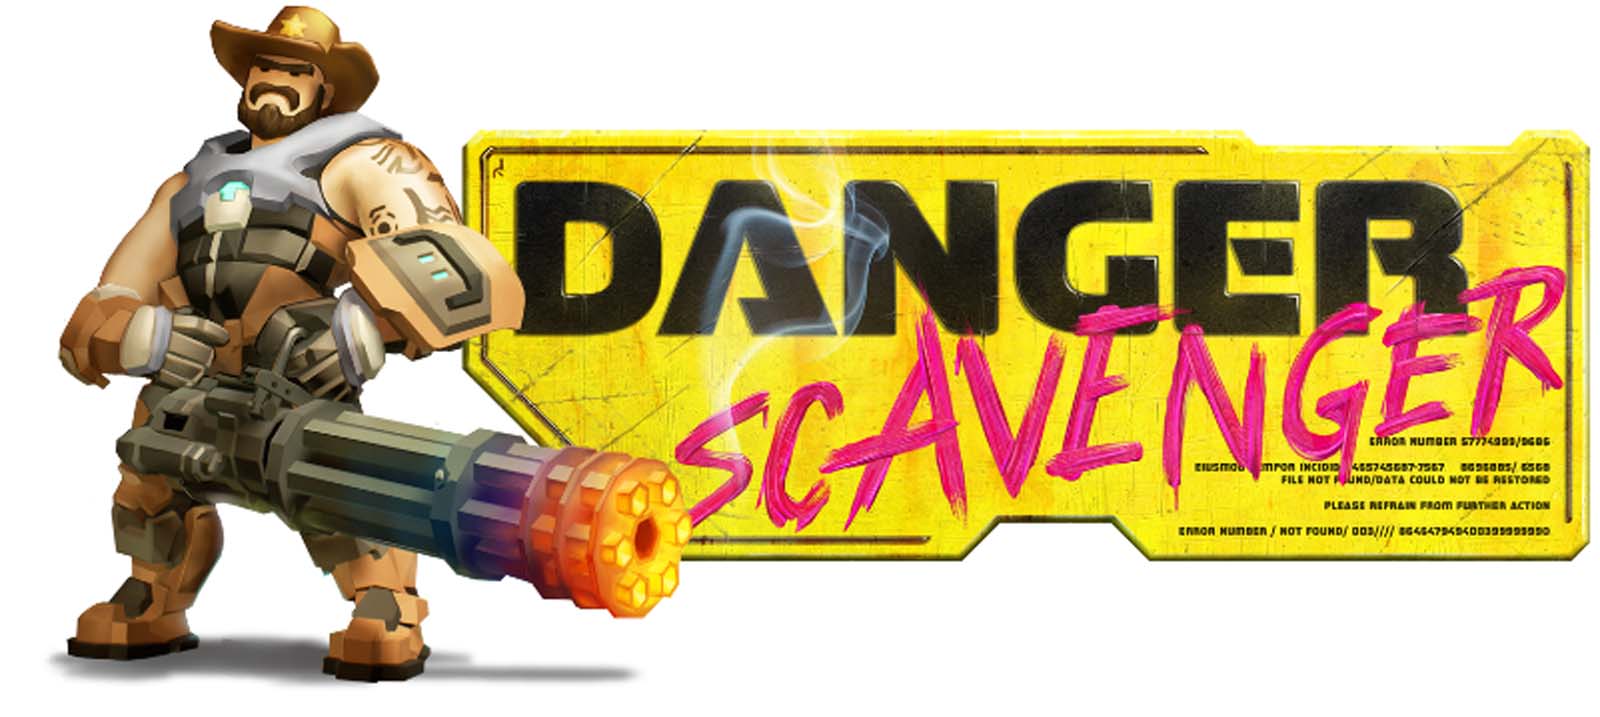 Danger Scavenger download the last version for ipod